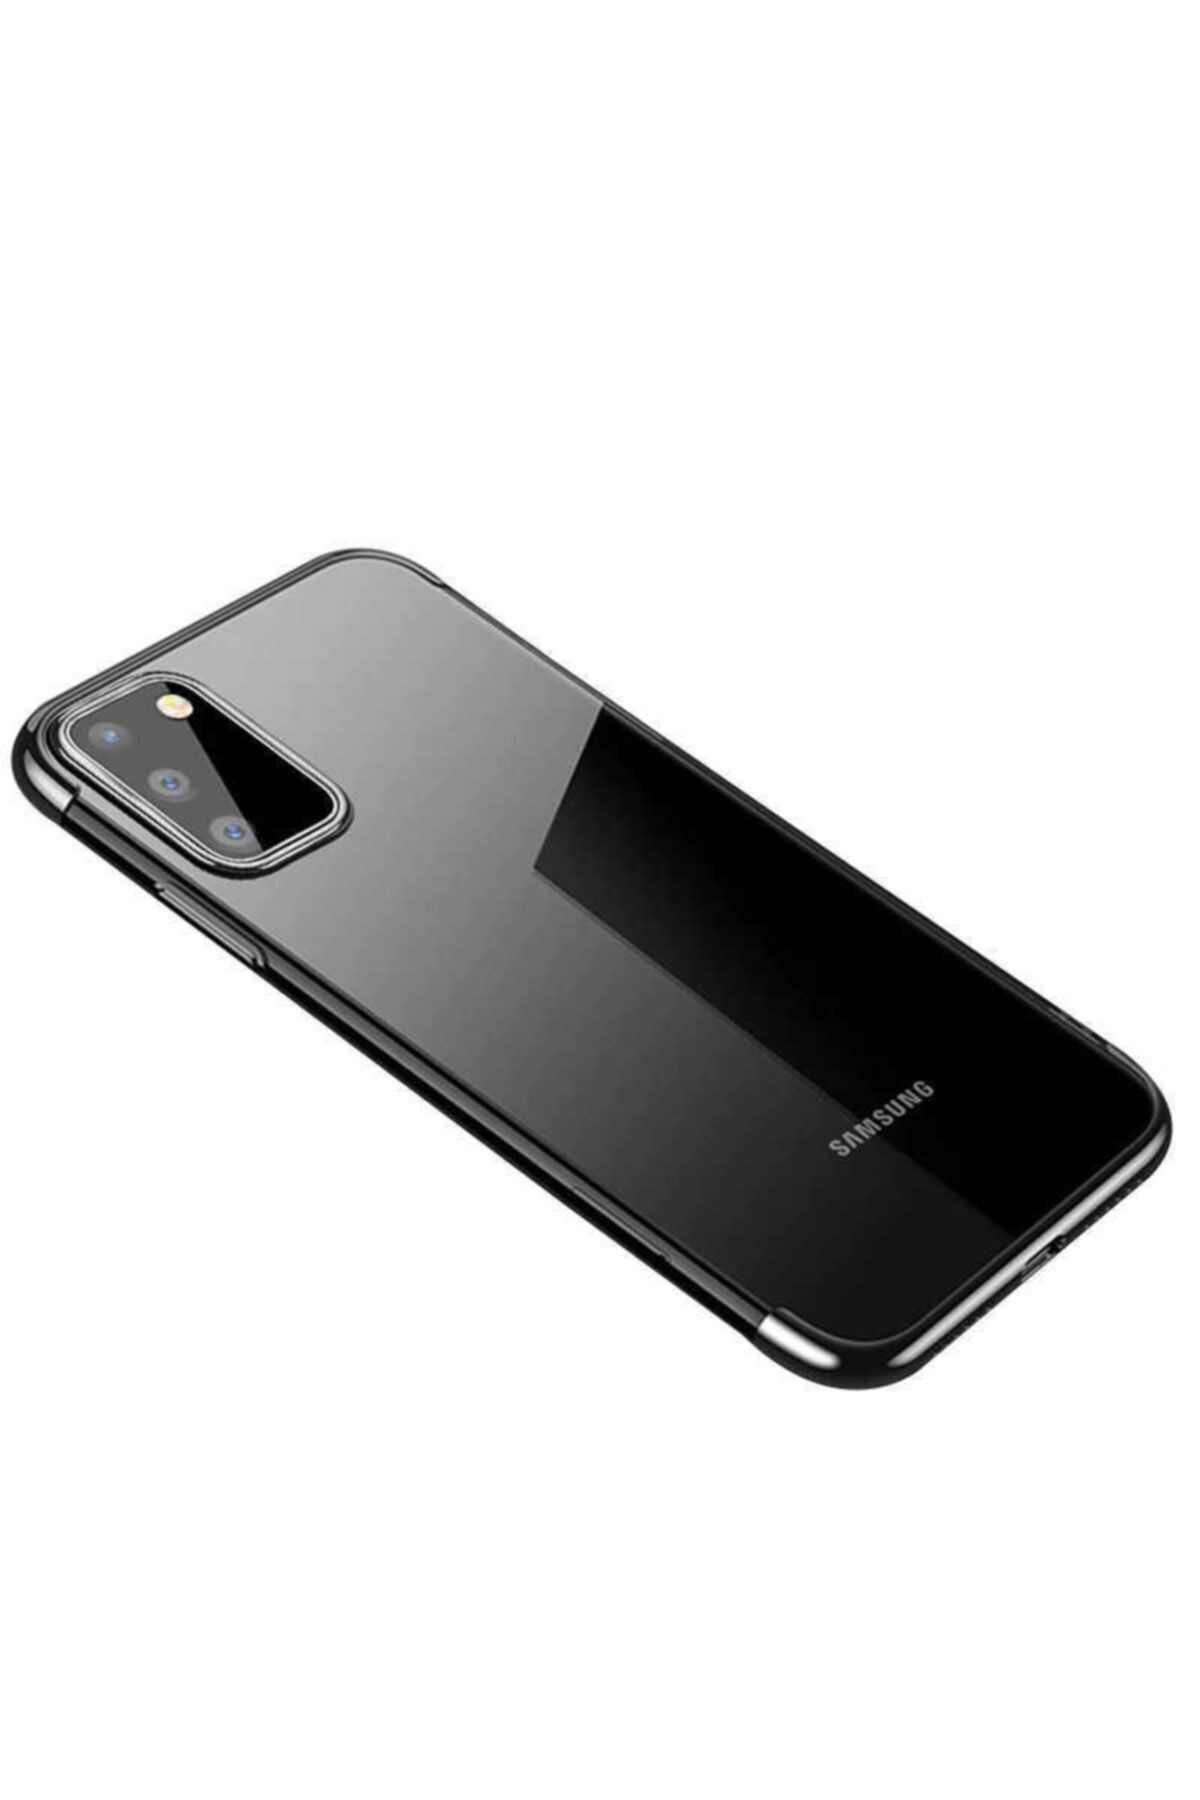 Fibaks Samsung Galaxy A91 Uyumlu Kılıf Dört Köşe Renkli Şeffaf Silikon